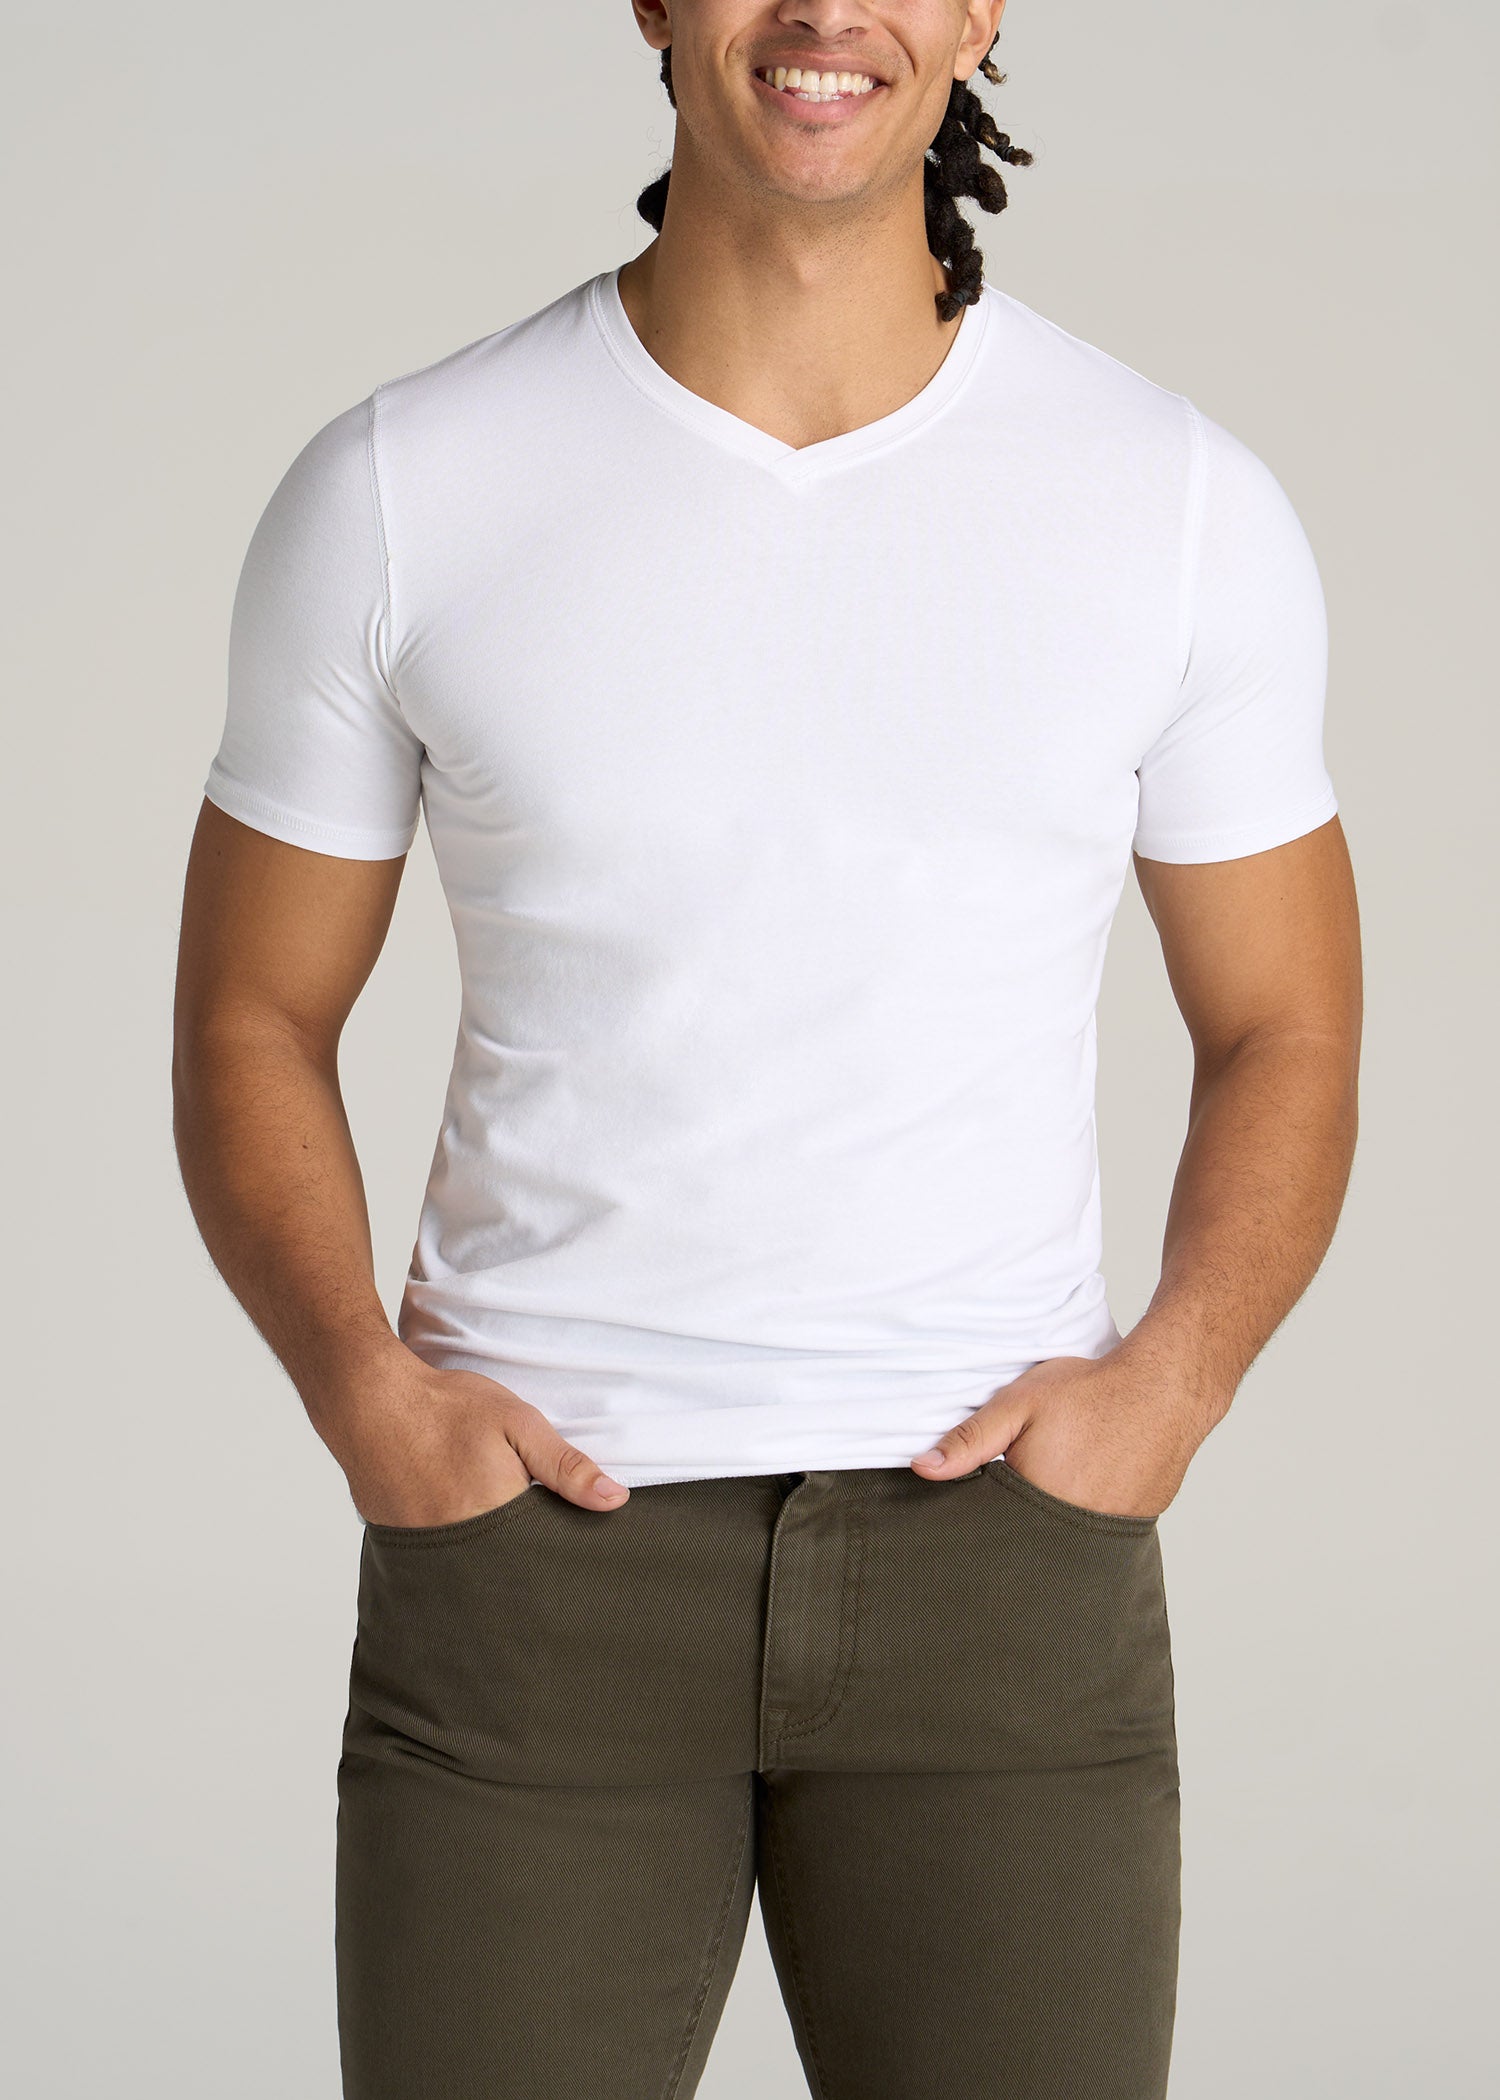 Original Essentials Slim-Fit V-Neck Shirt for Tall Men American Tall